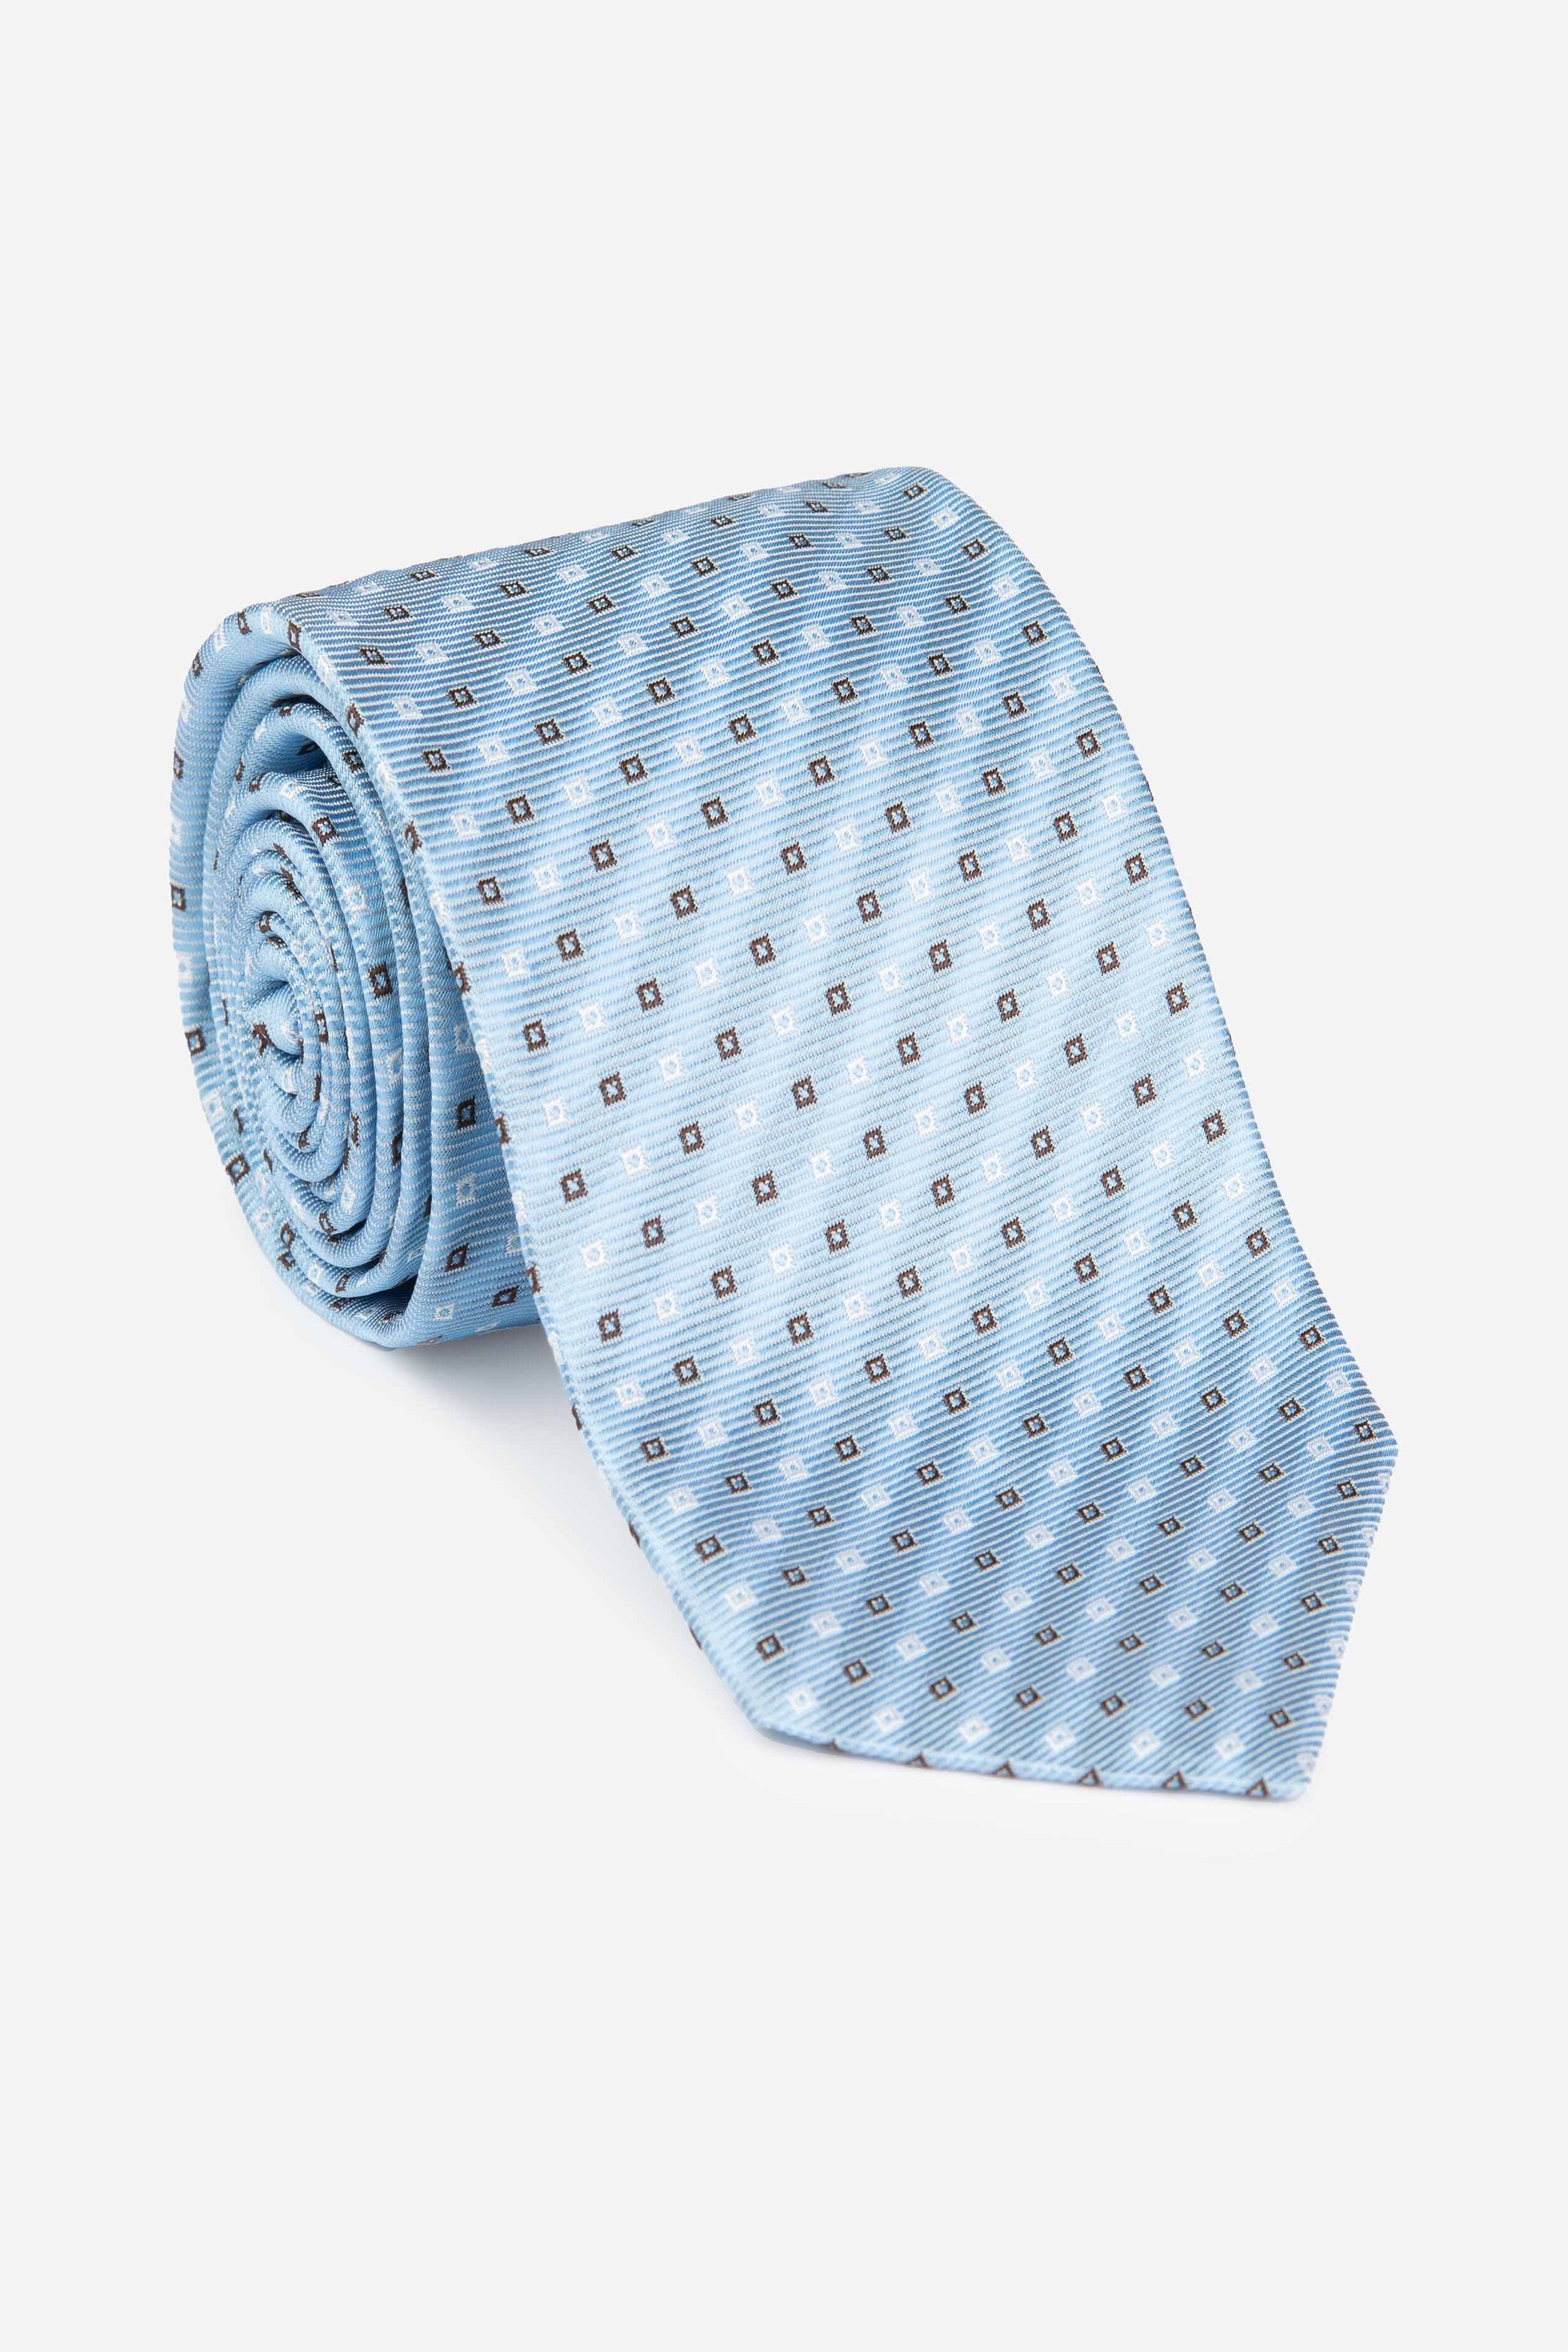 Cravatta azzurra microfantasia - AZZURRO MICROEFFETTO